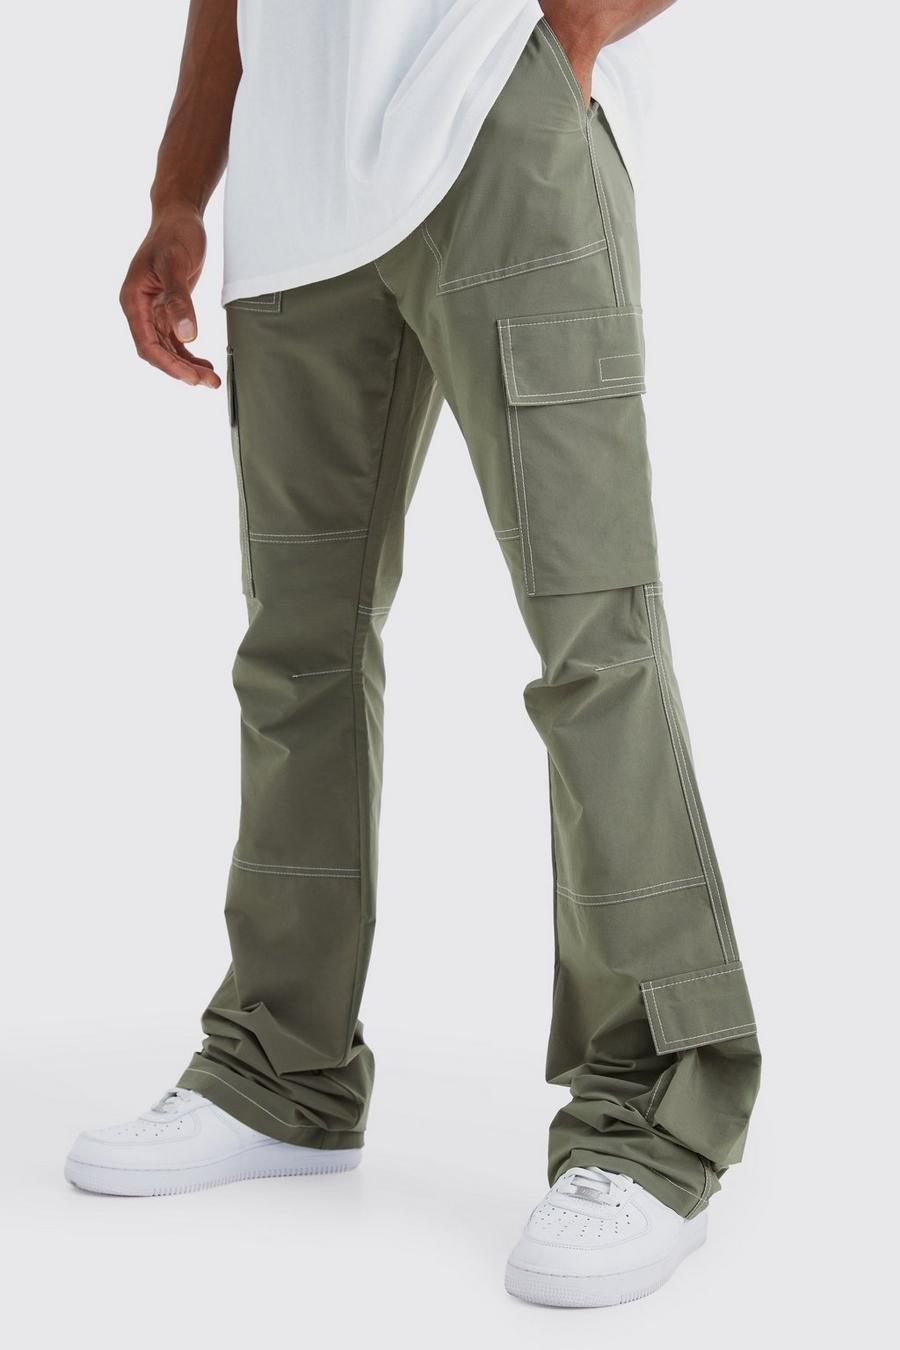 https://media.boohoo.com/i/boohoo/bmm58597_olive_xl/male-olive-elastic-waist-slim-flare-contrast-stitch-cargo-trouser/?w=900&qlt=default&fmt.jp2.qlt=70&fmt=auto&sm=fit